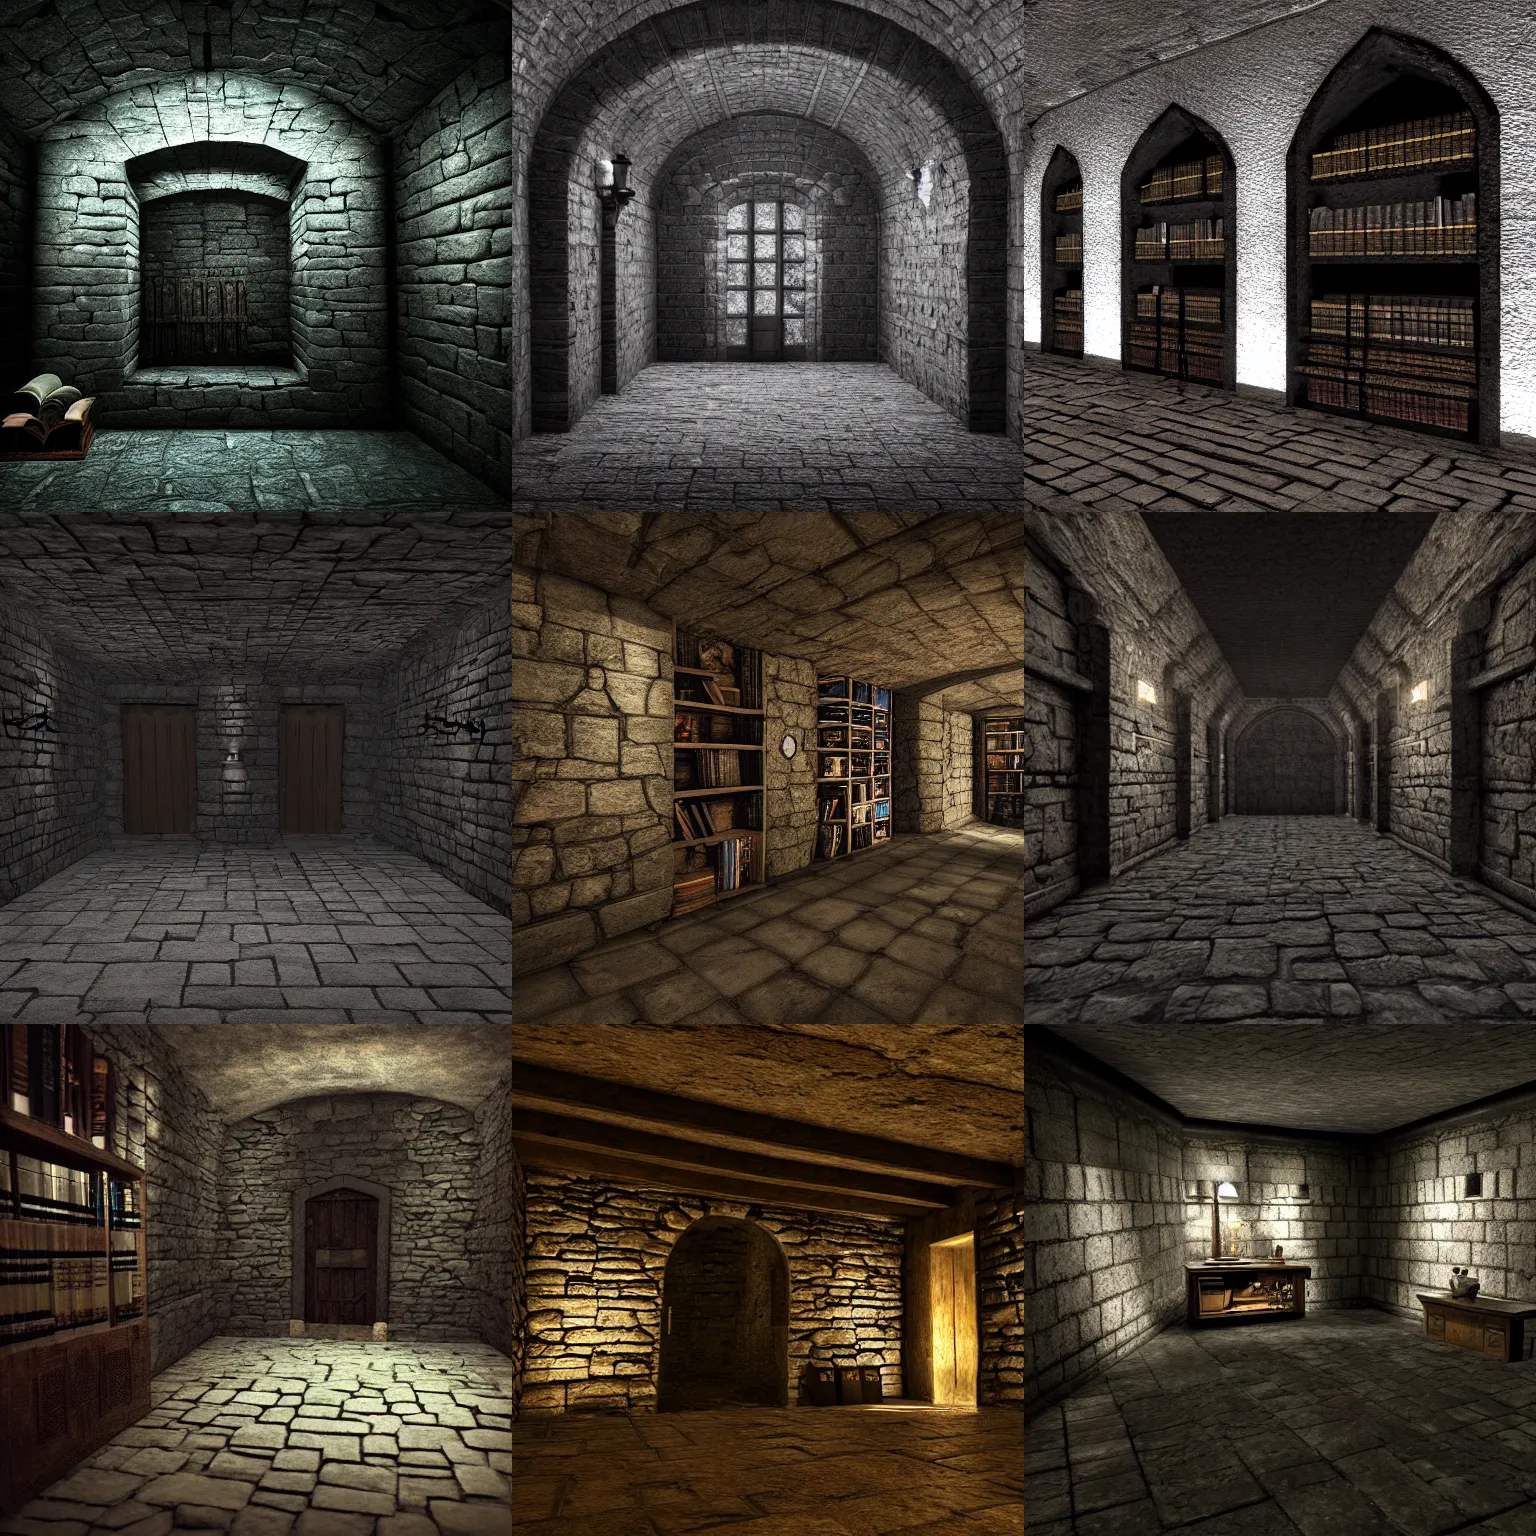 Prompt: dark crypt room with bookshelves, stone walls, gloomy, midnight, shadow, unreal engine, style of dark academia